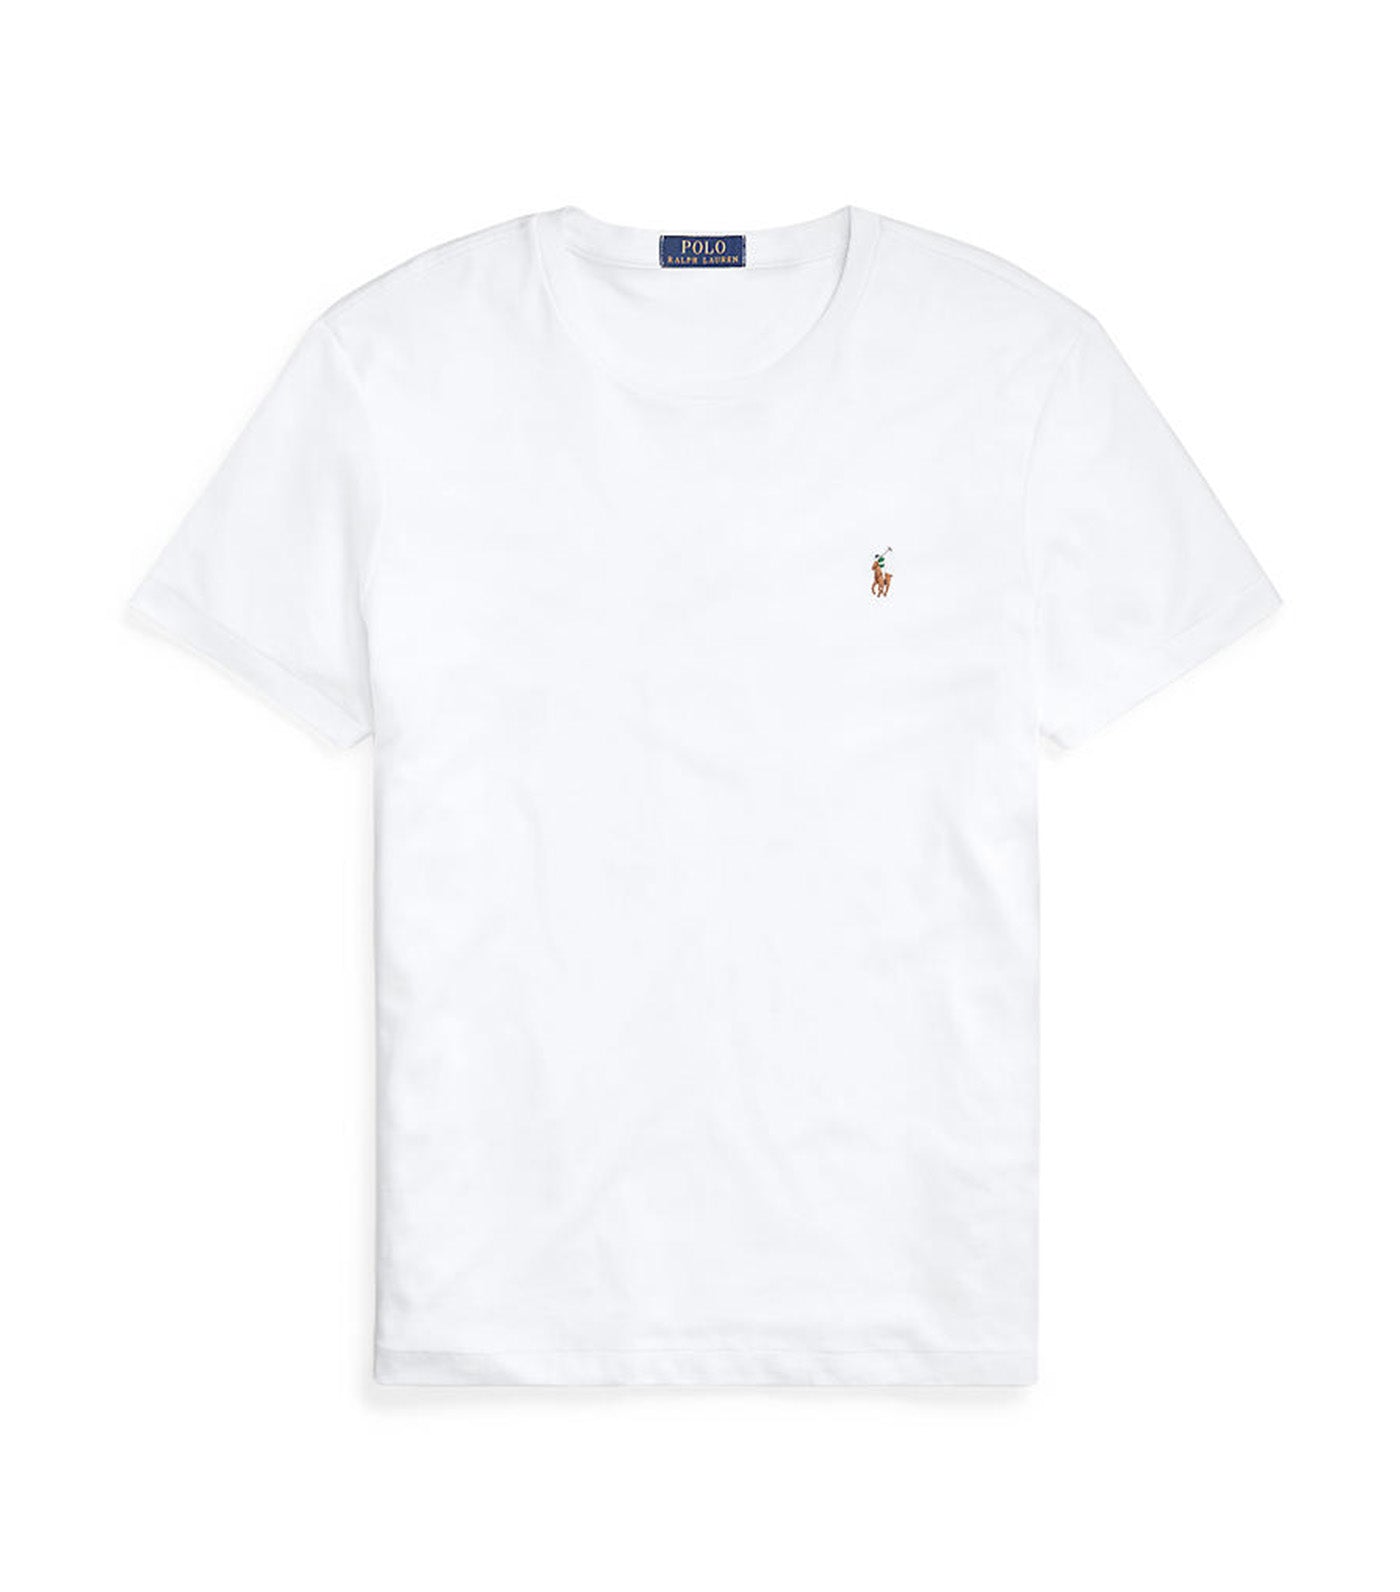 Men's Custom Slim Fit Soft Cotton T-Shirt White